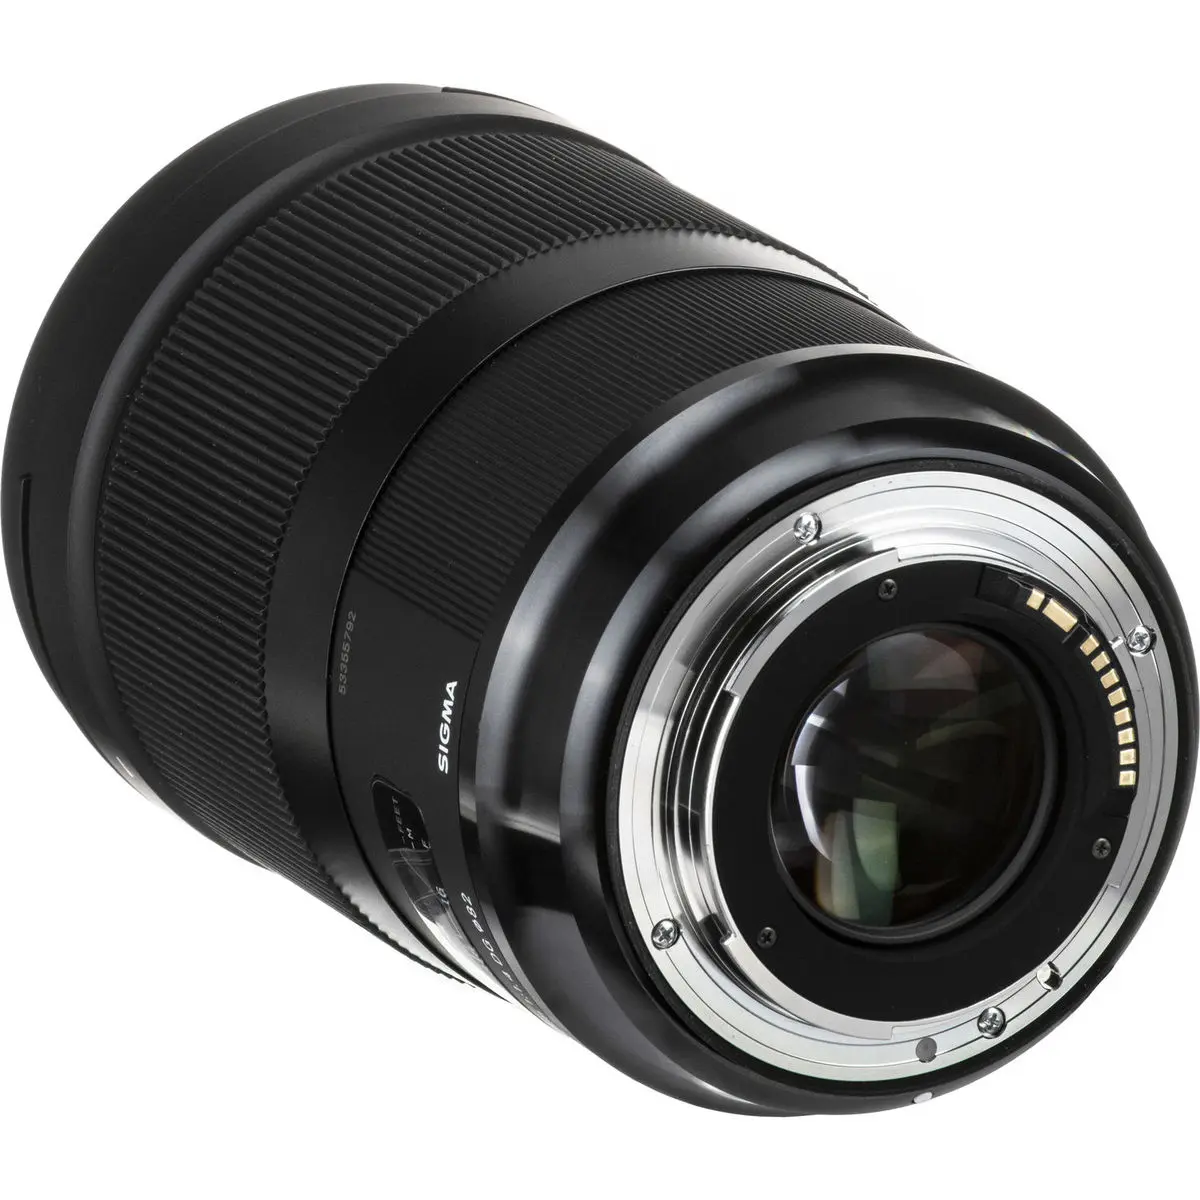 5. Sigma 40mm F1.4 DG HSM | Art (Leica L) Lens